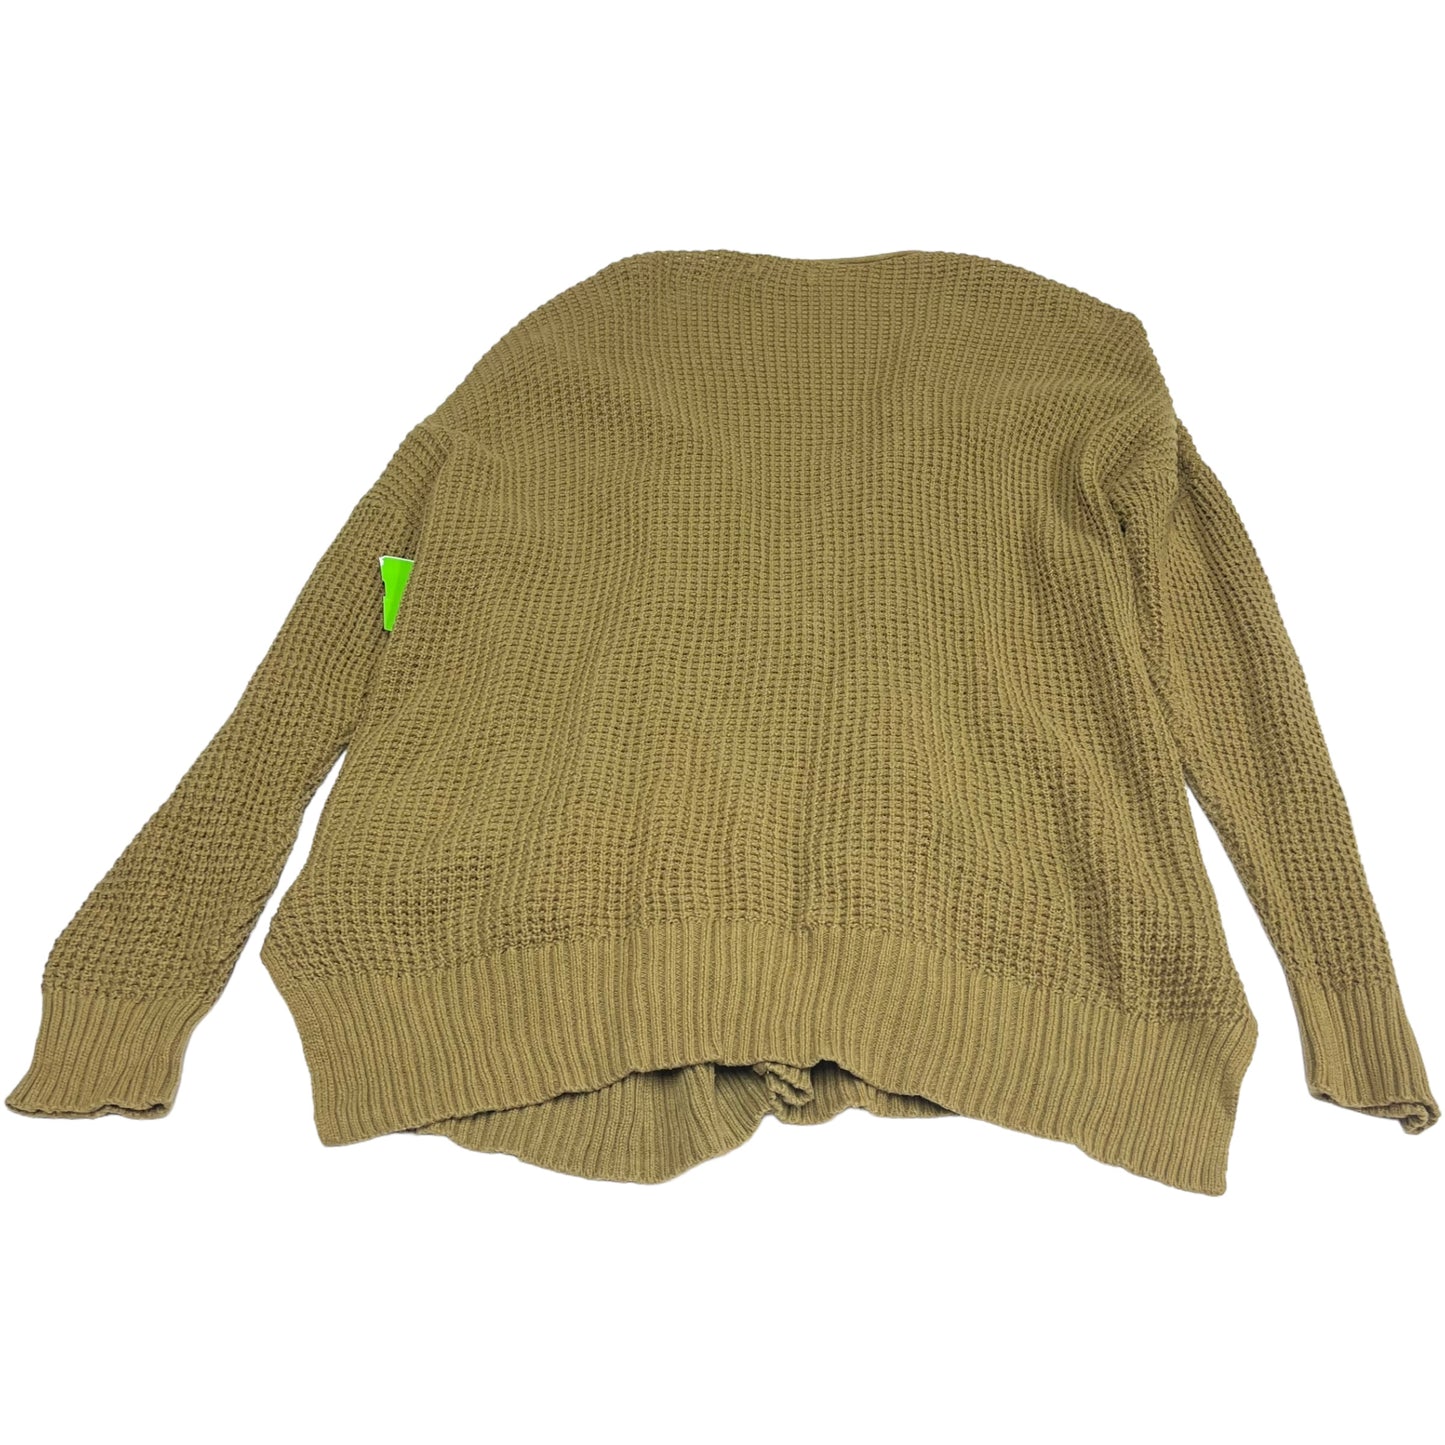 Sweater Cardigan By Universal Thread  Size: Xl